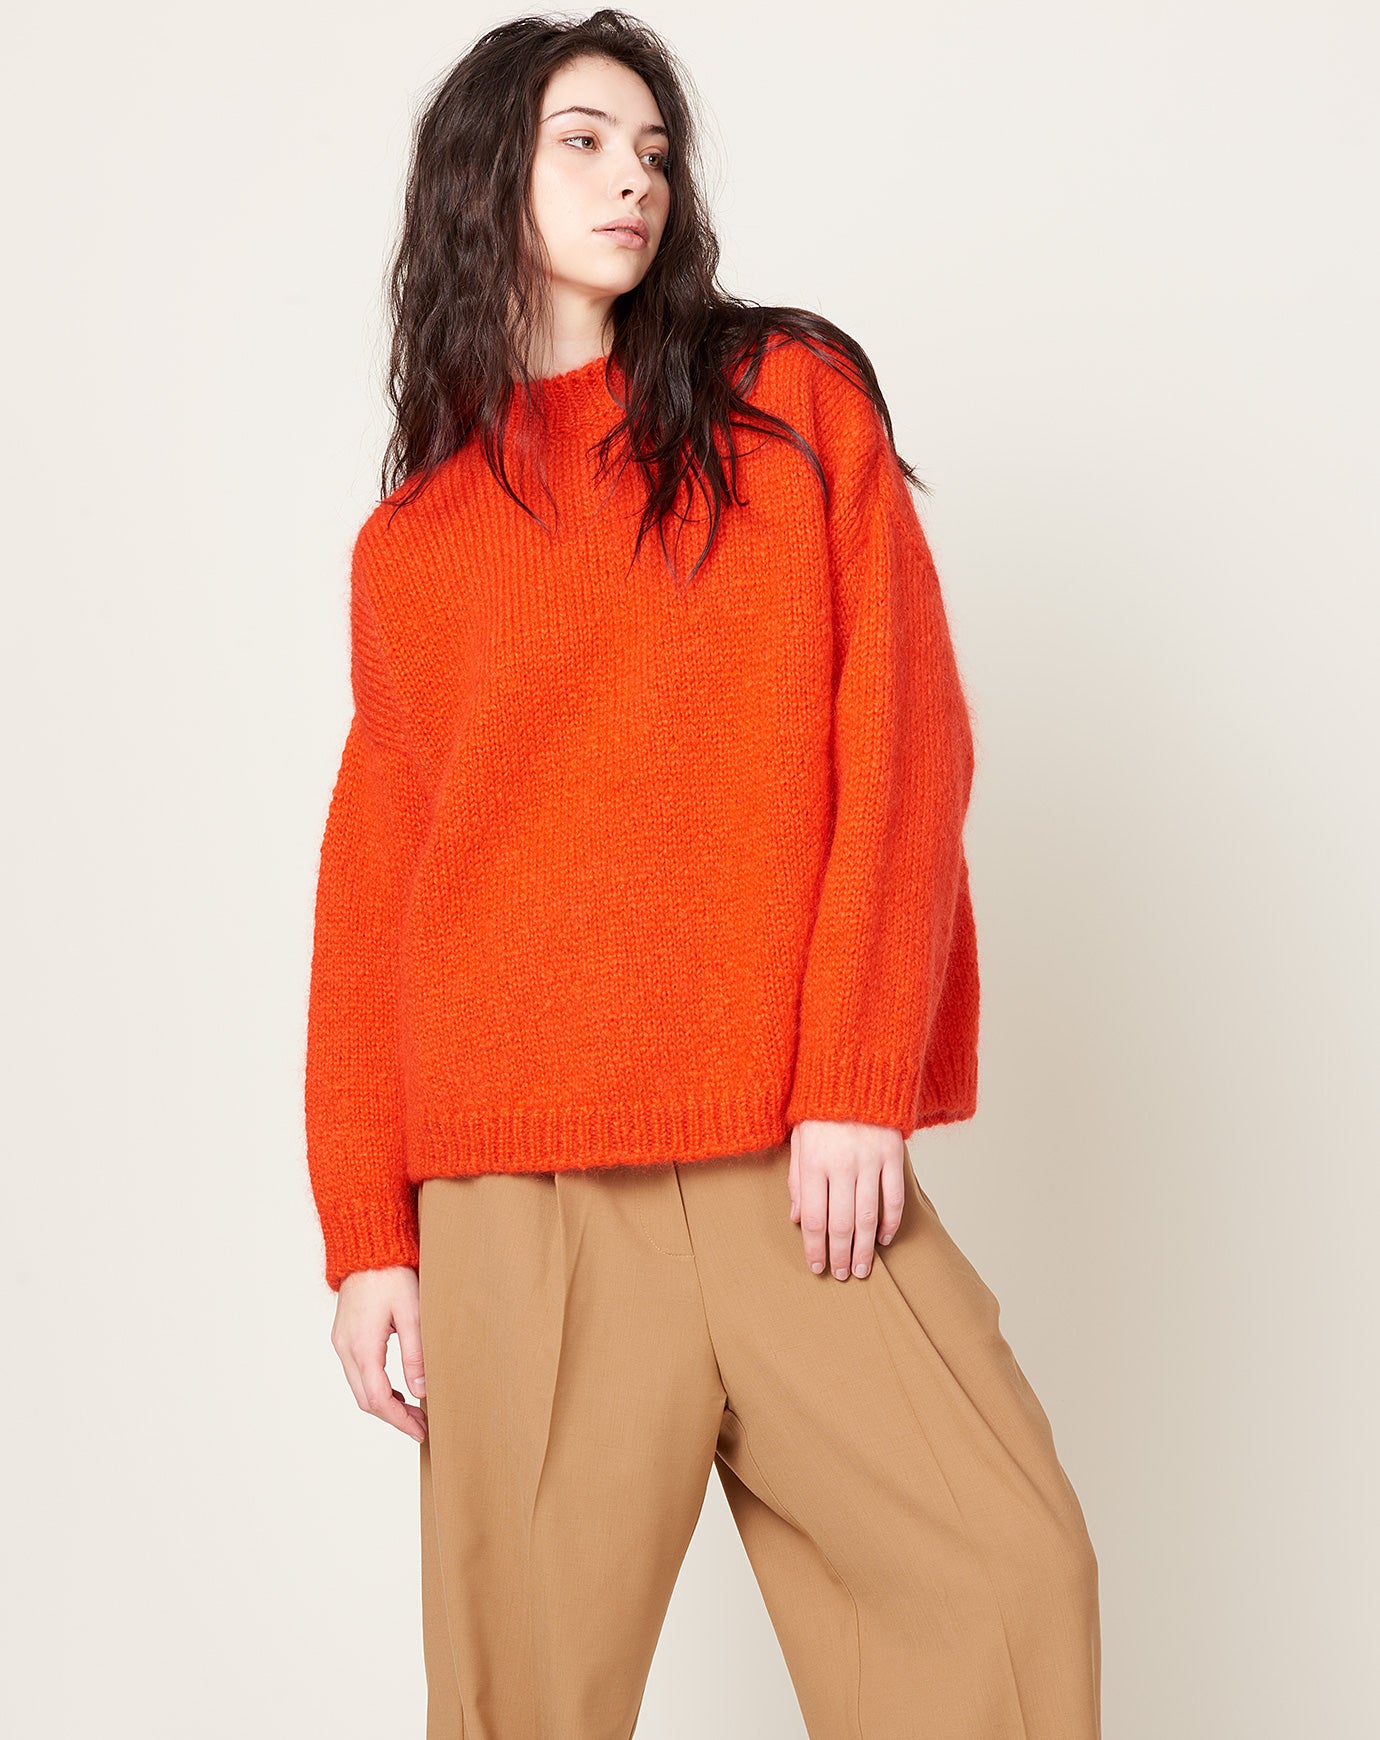 Cordera Mohair Sweater in Tangerine